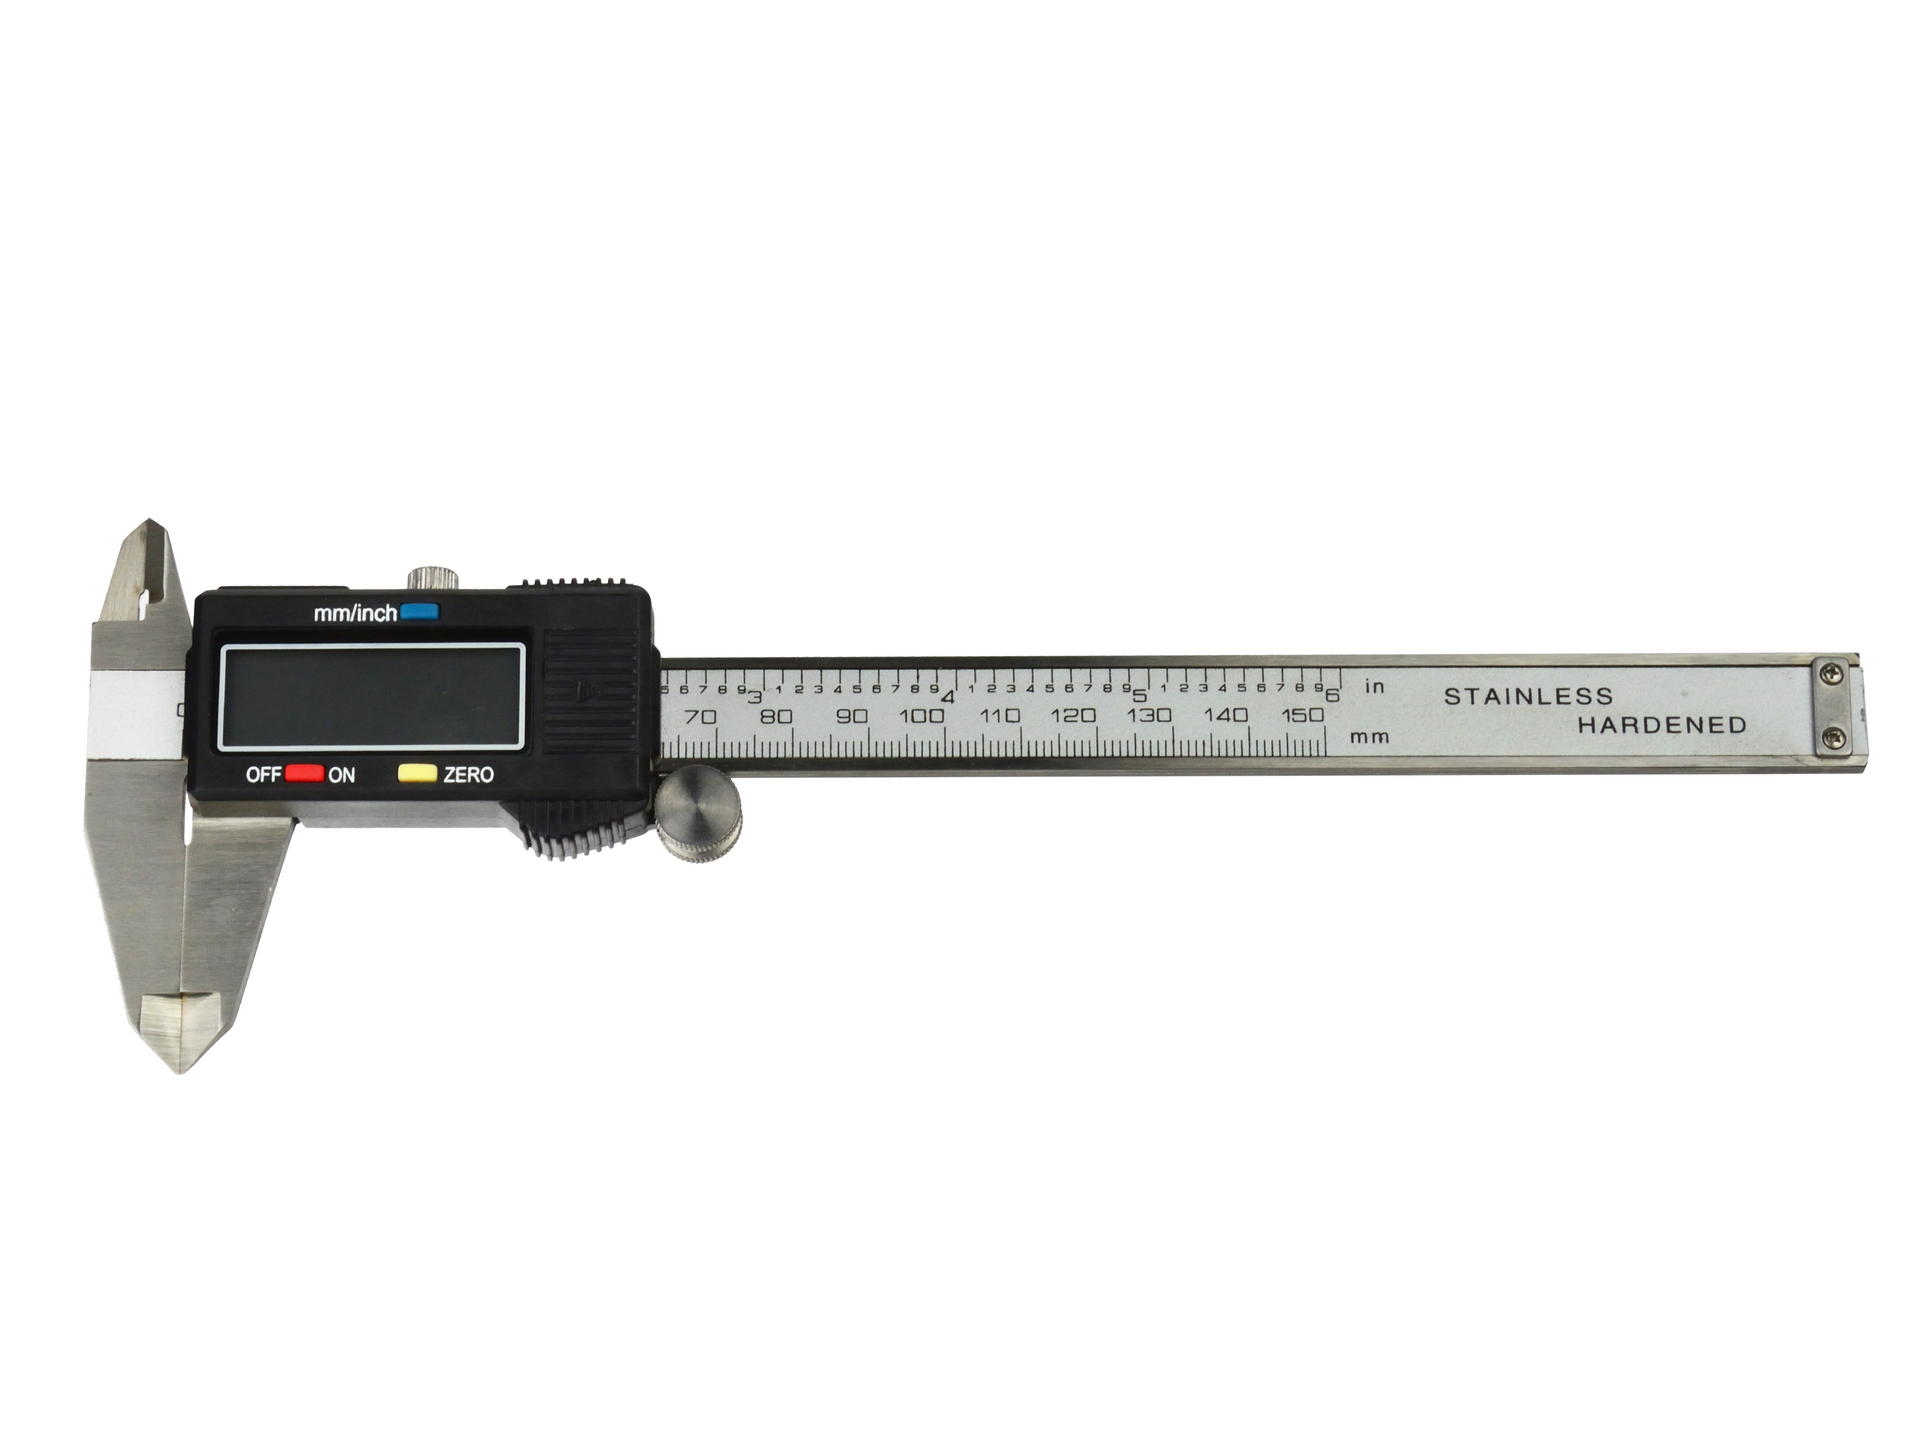 SUWMIARKA ELEKTRONICZNA  0-150mm/0,01 G01493